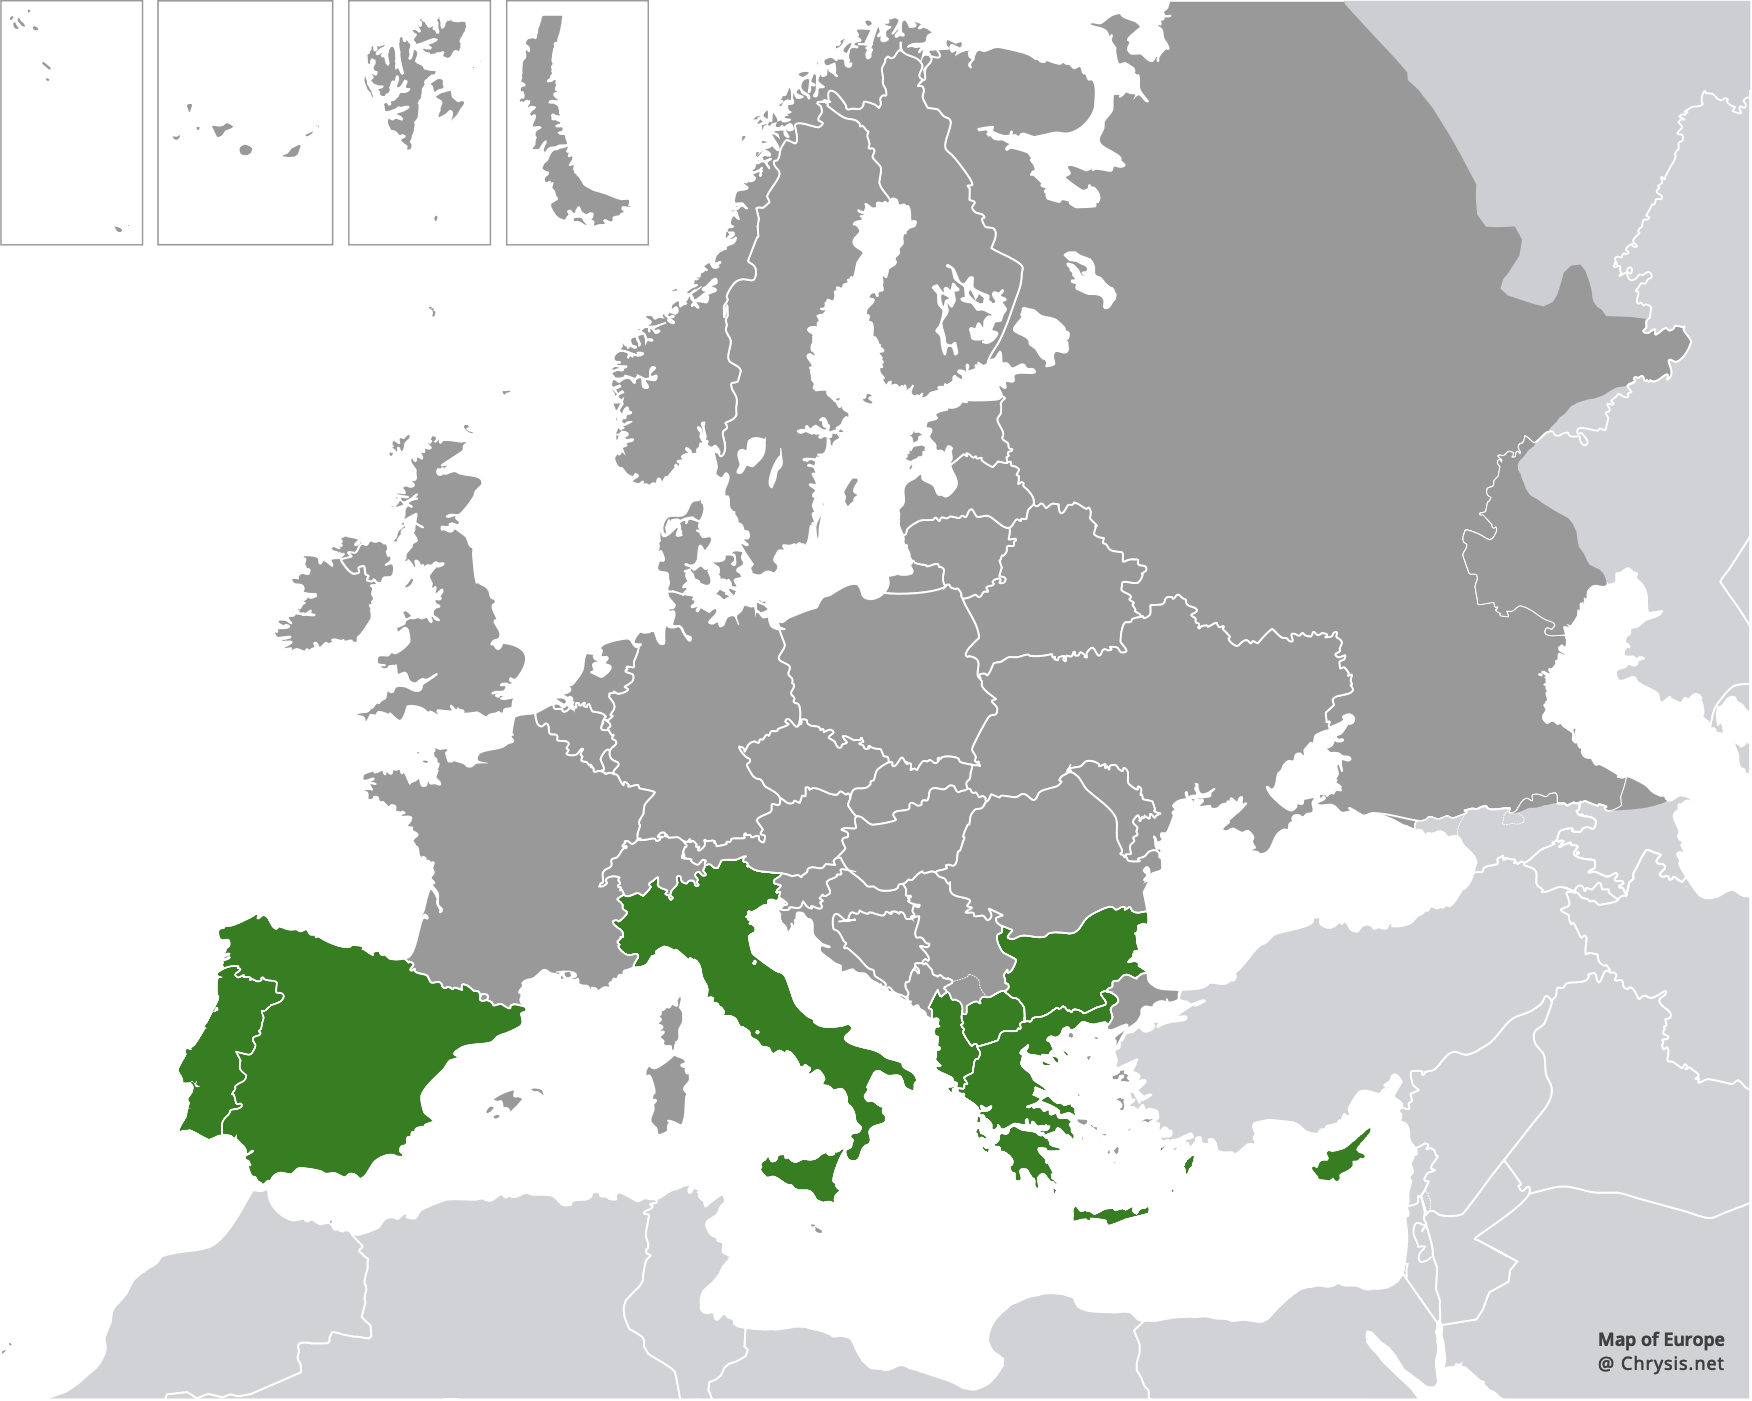 European distribution of Chrysis taczanovskii